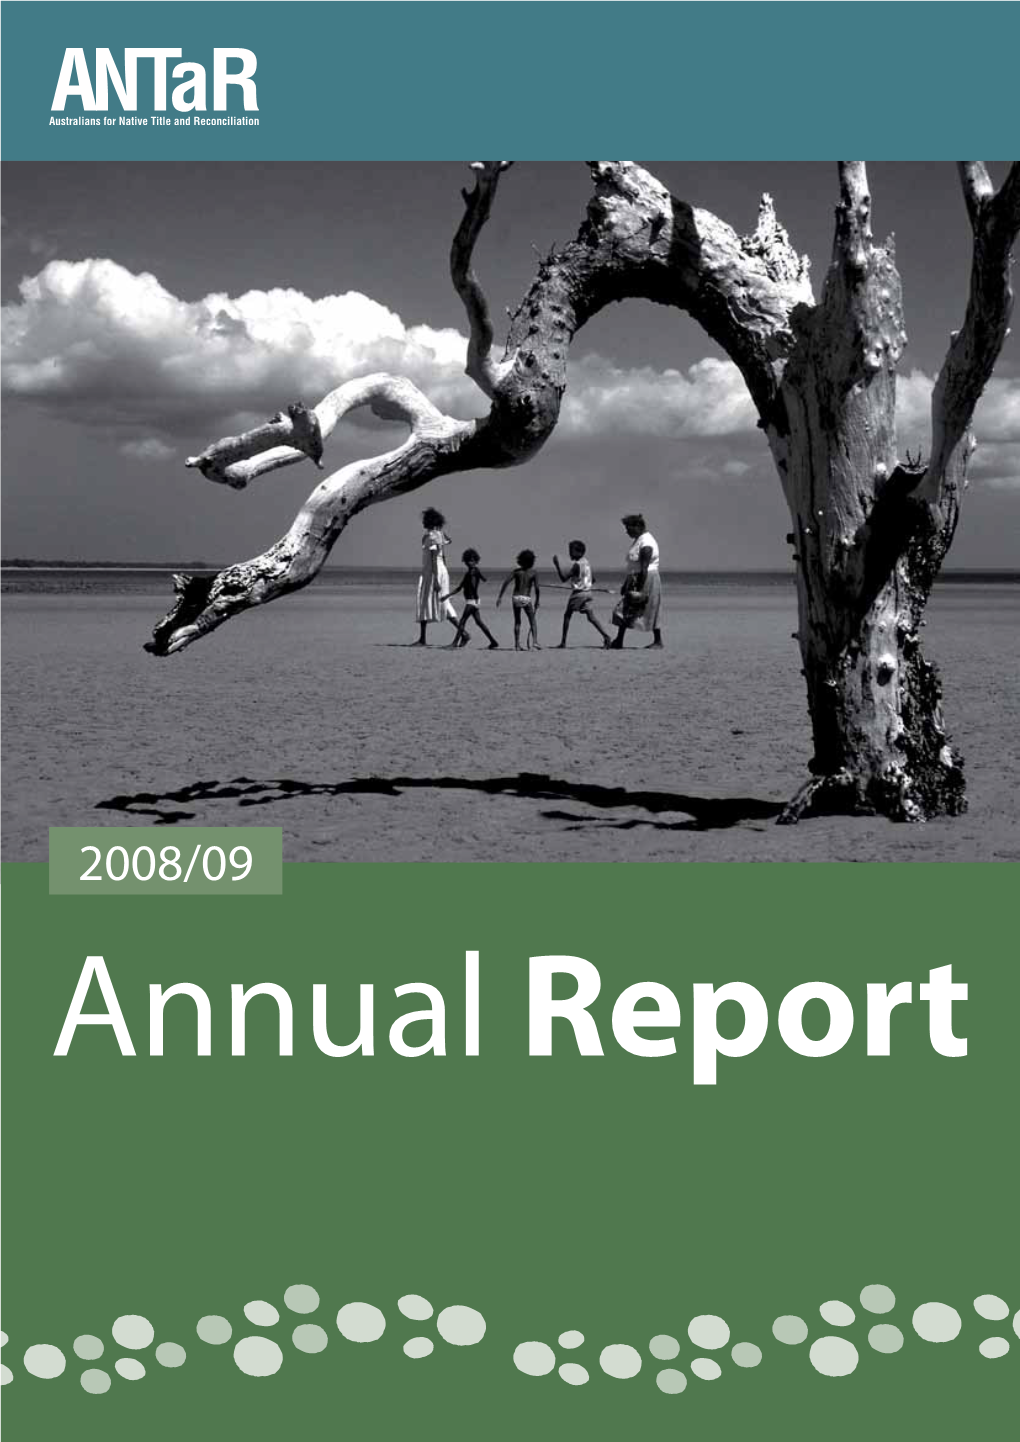 2008/09 Annual Report Antar Annual Report 2008/09